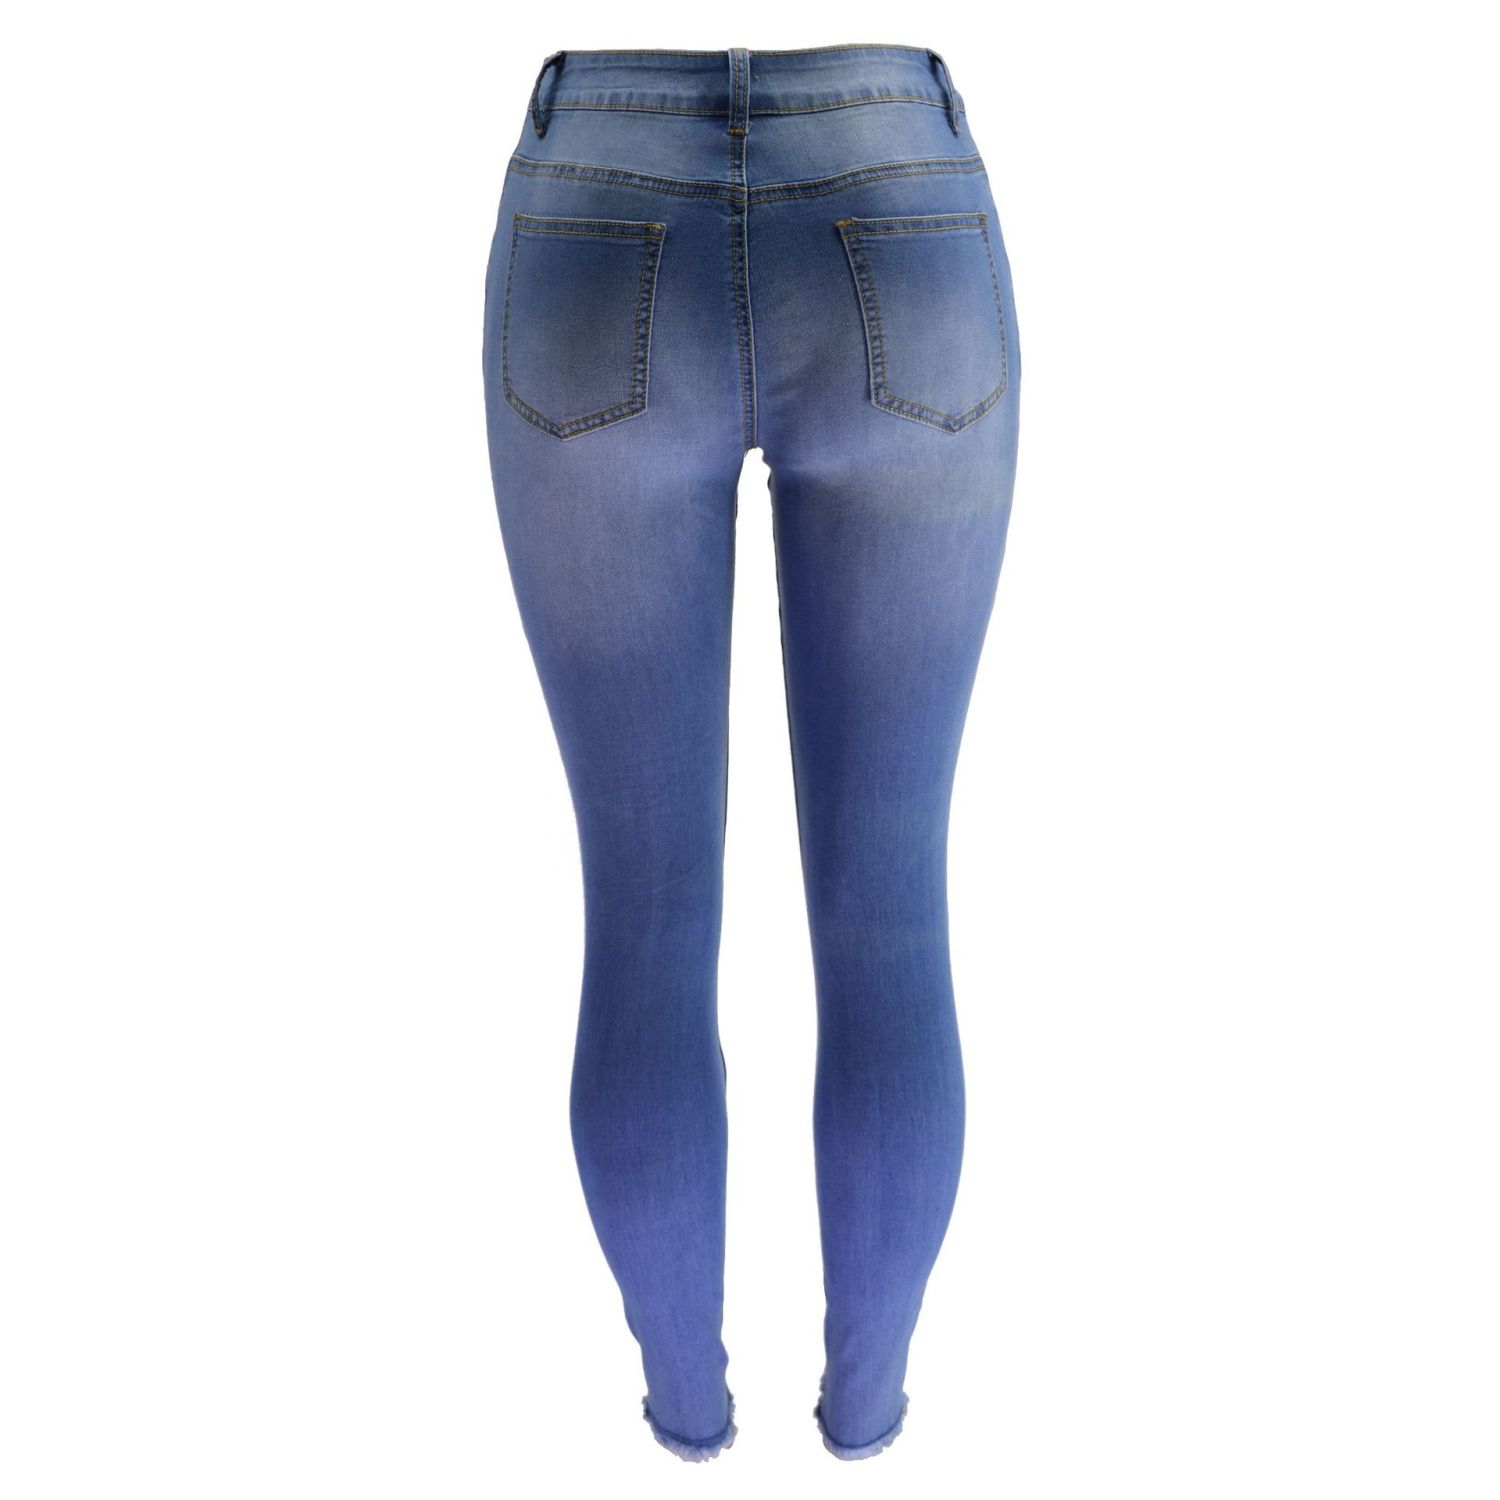 US$ 9.60 - jeans hole pants 9021 - www.dream-flying01.com